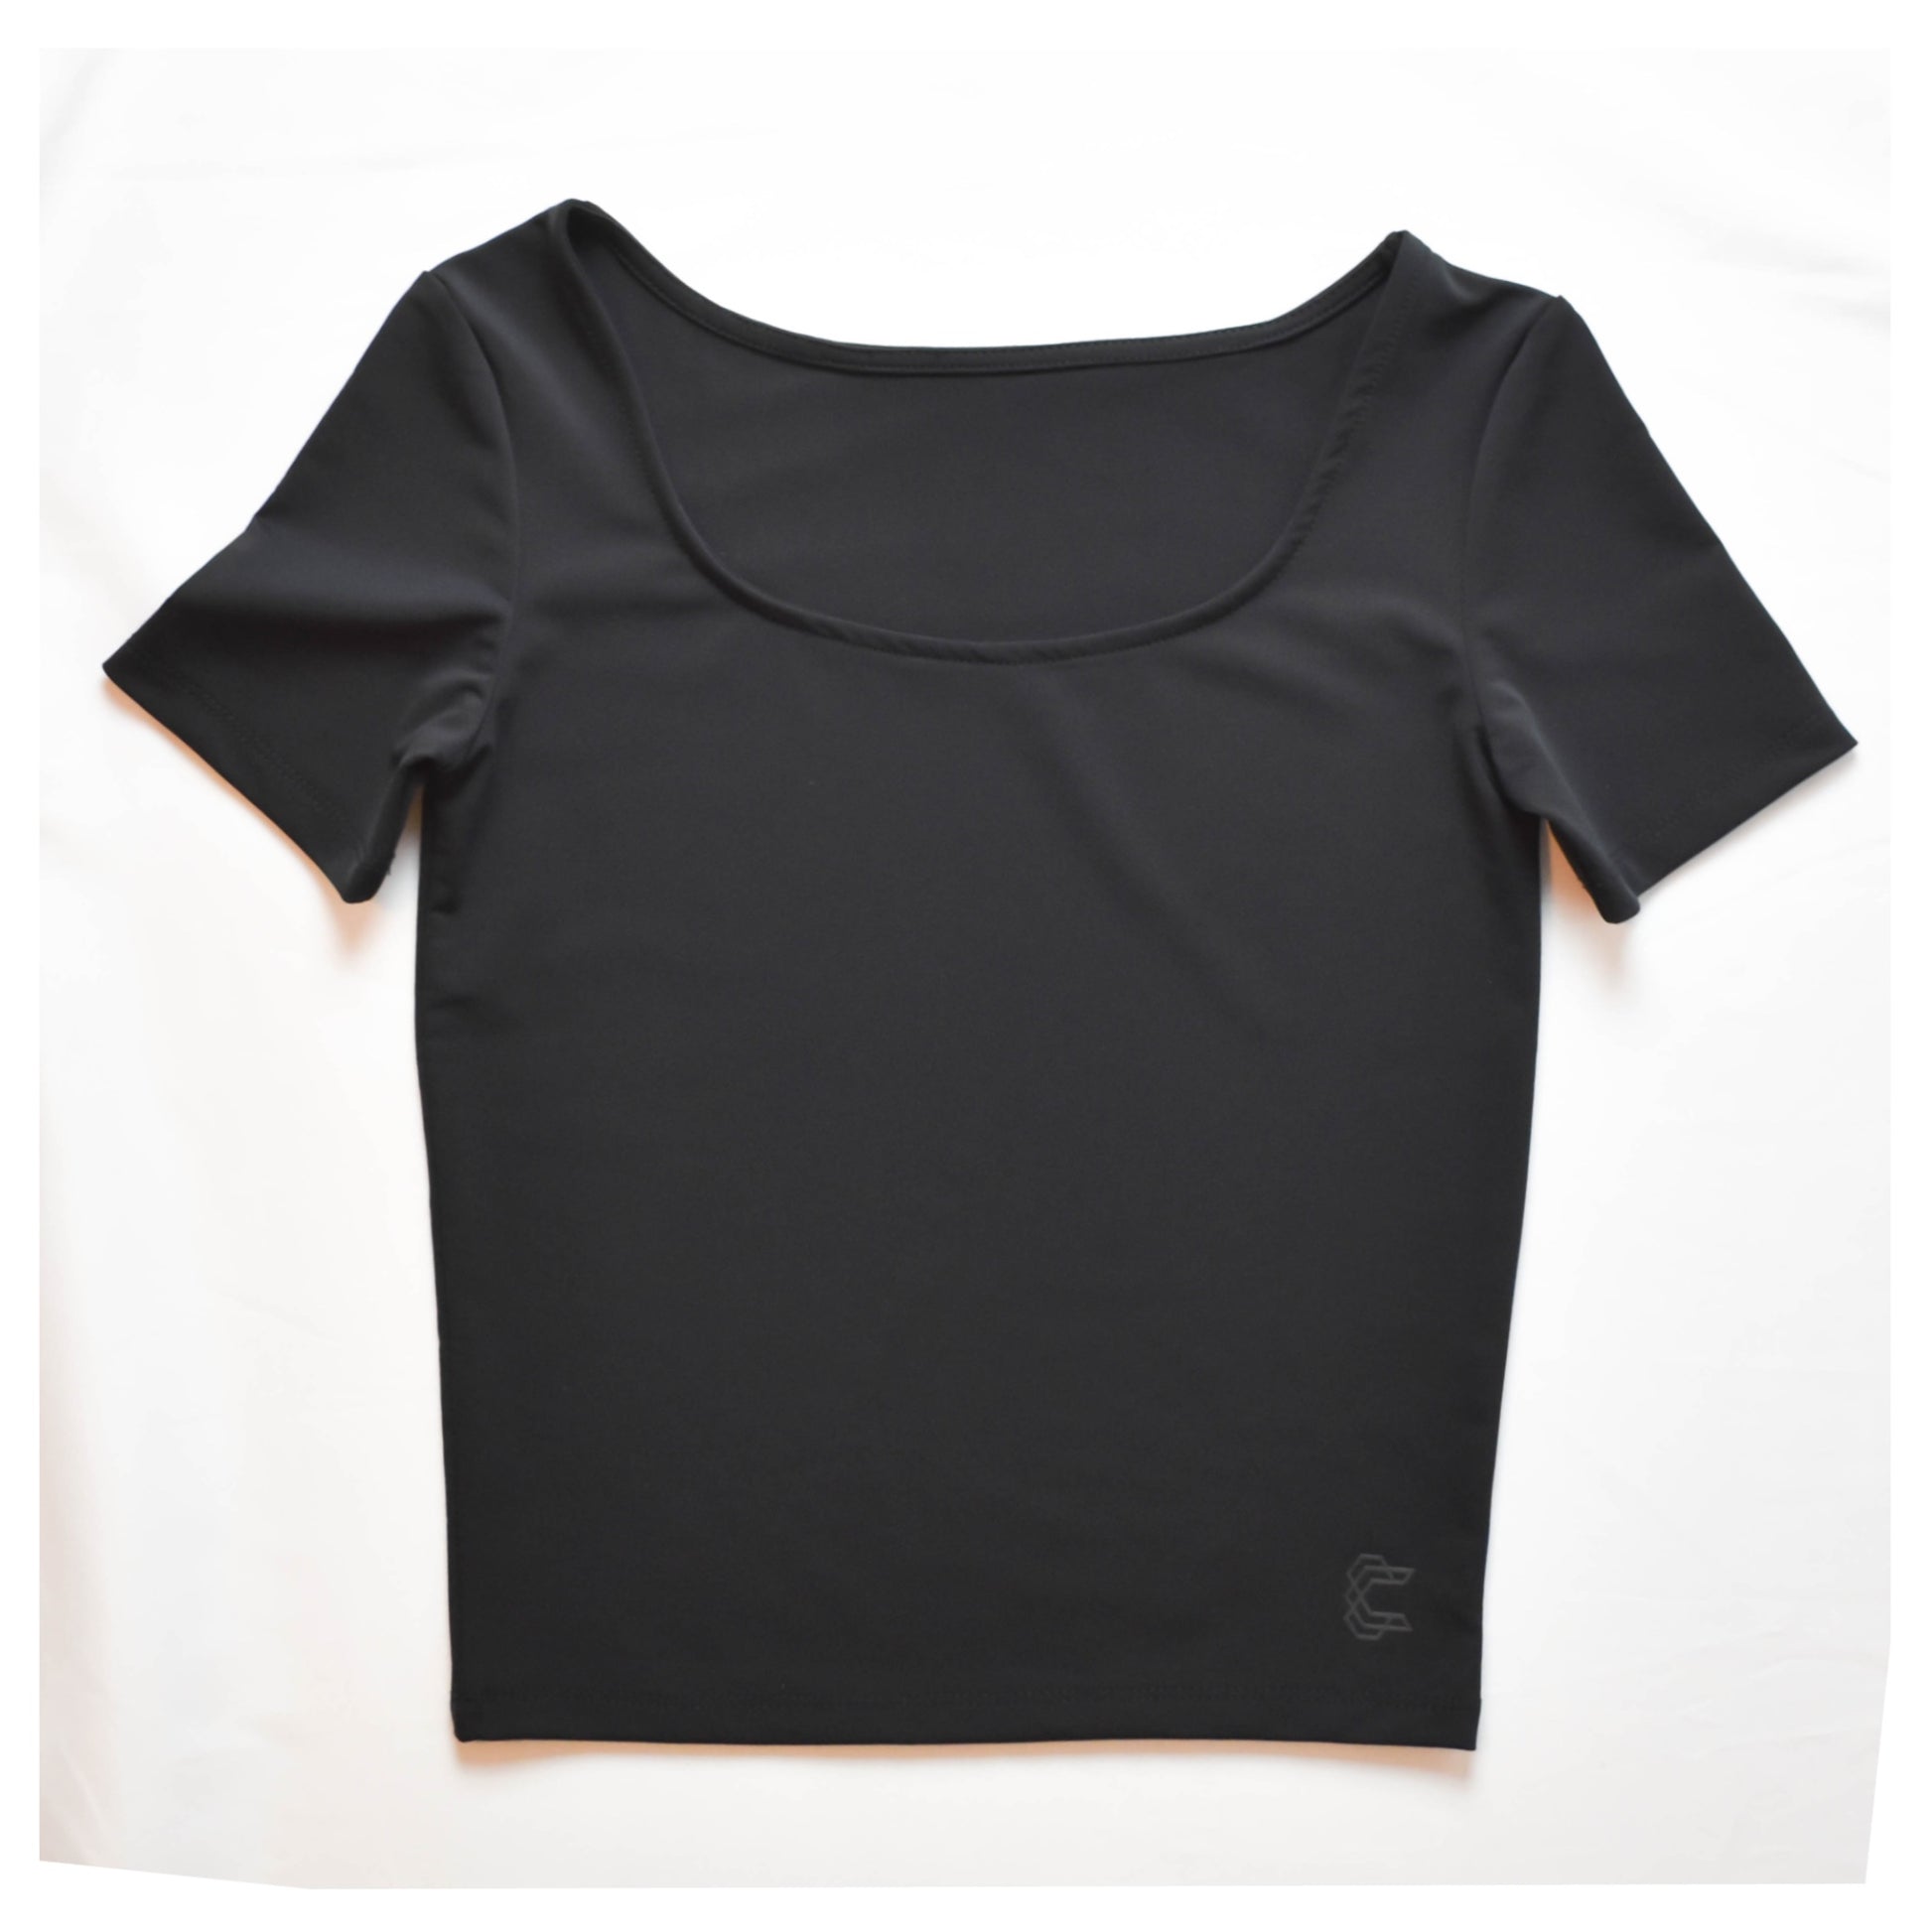 Black Reversible High Neck and Scoop Neck UPF 50+ Women's Short Sleeve Versatile Sun Protective Top